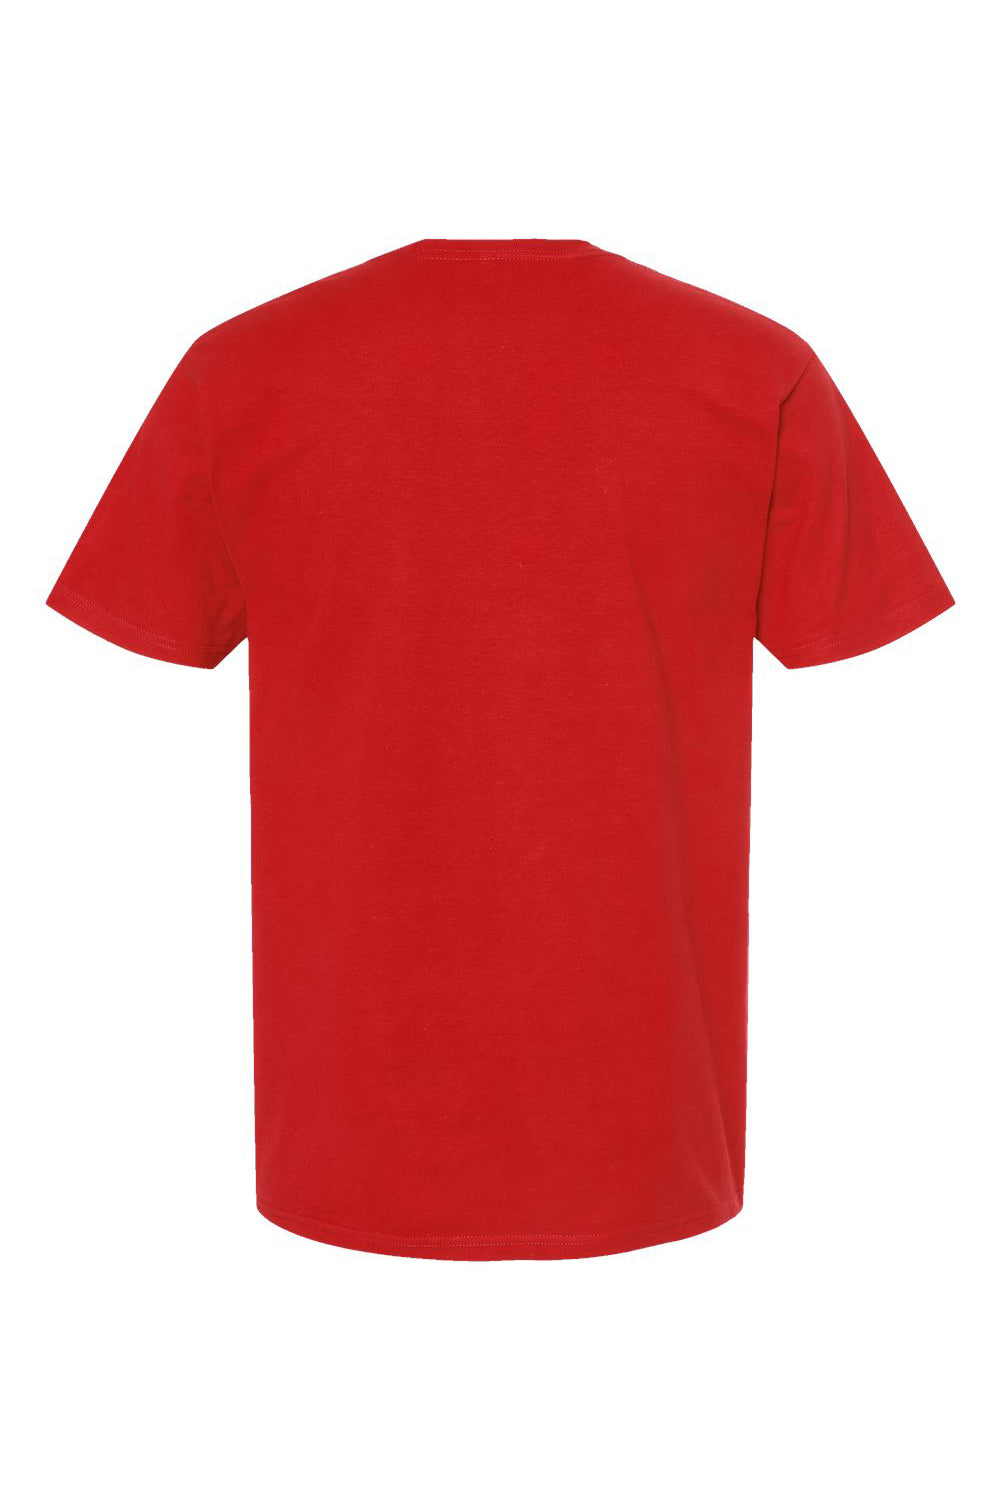 Tultex 290 Mens Jersey Short Sleeve Crewneck T-Shirt Red Flat Back